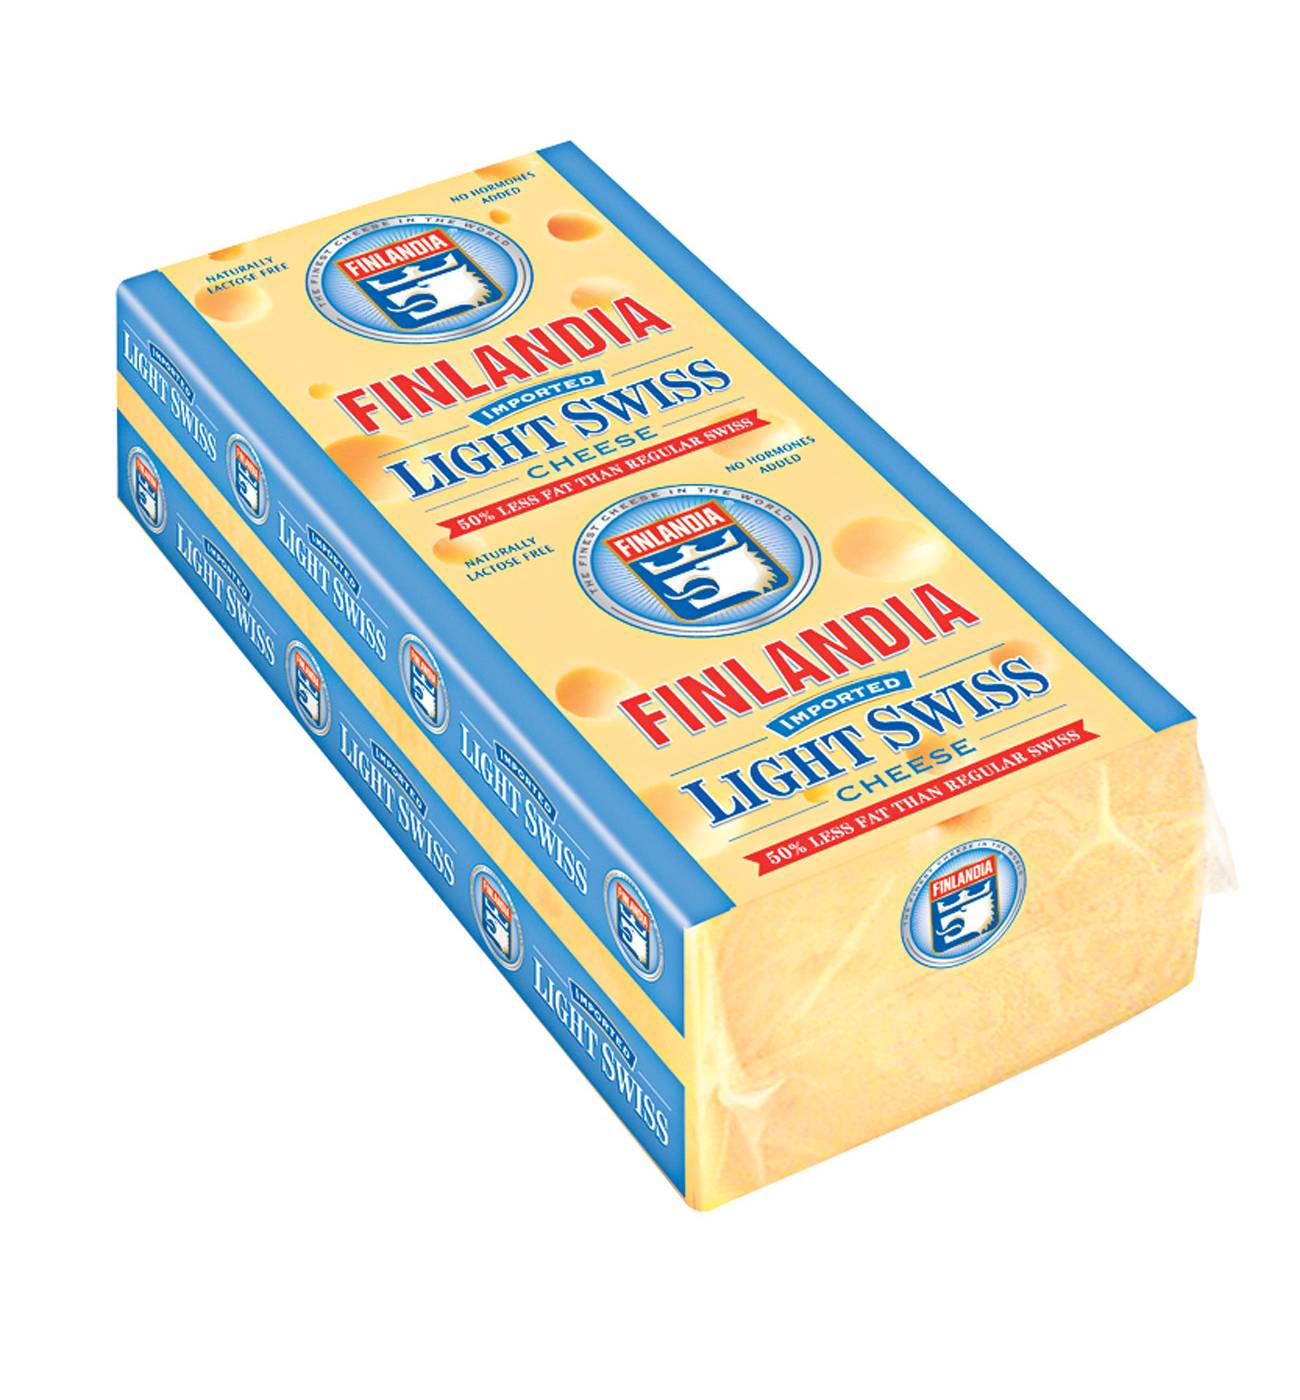 Finlandia Light Swiss Cheese, Sliced; image 2 of 2